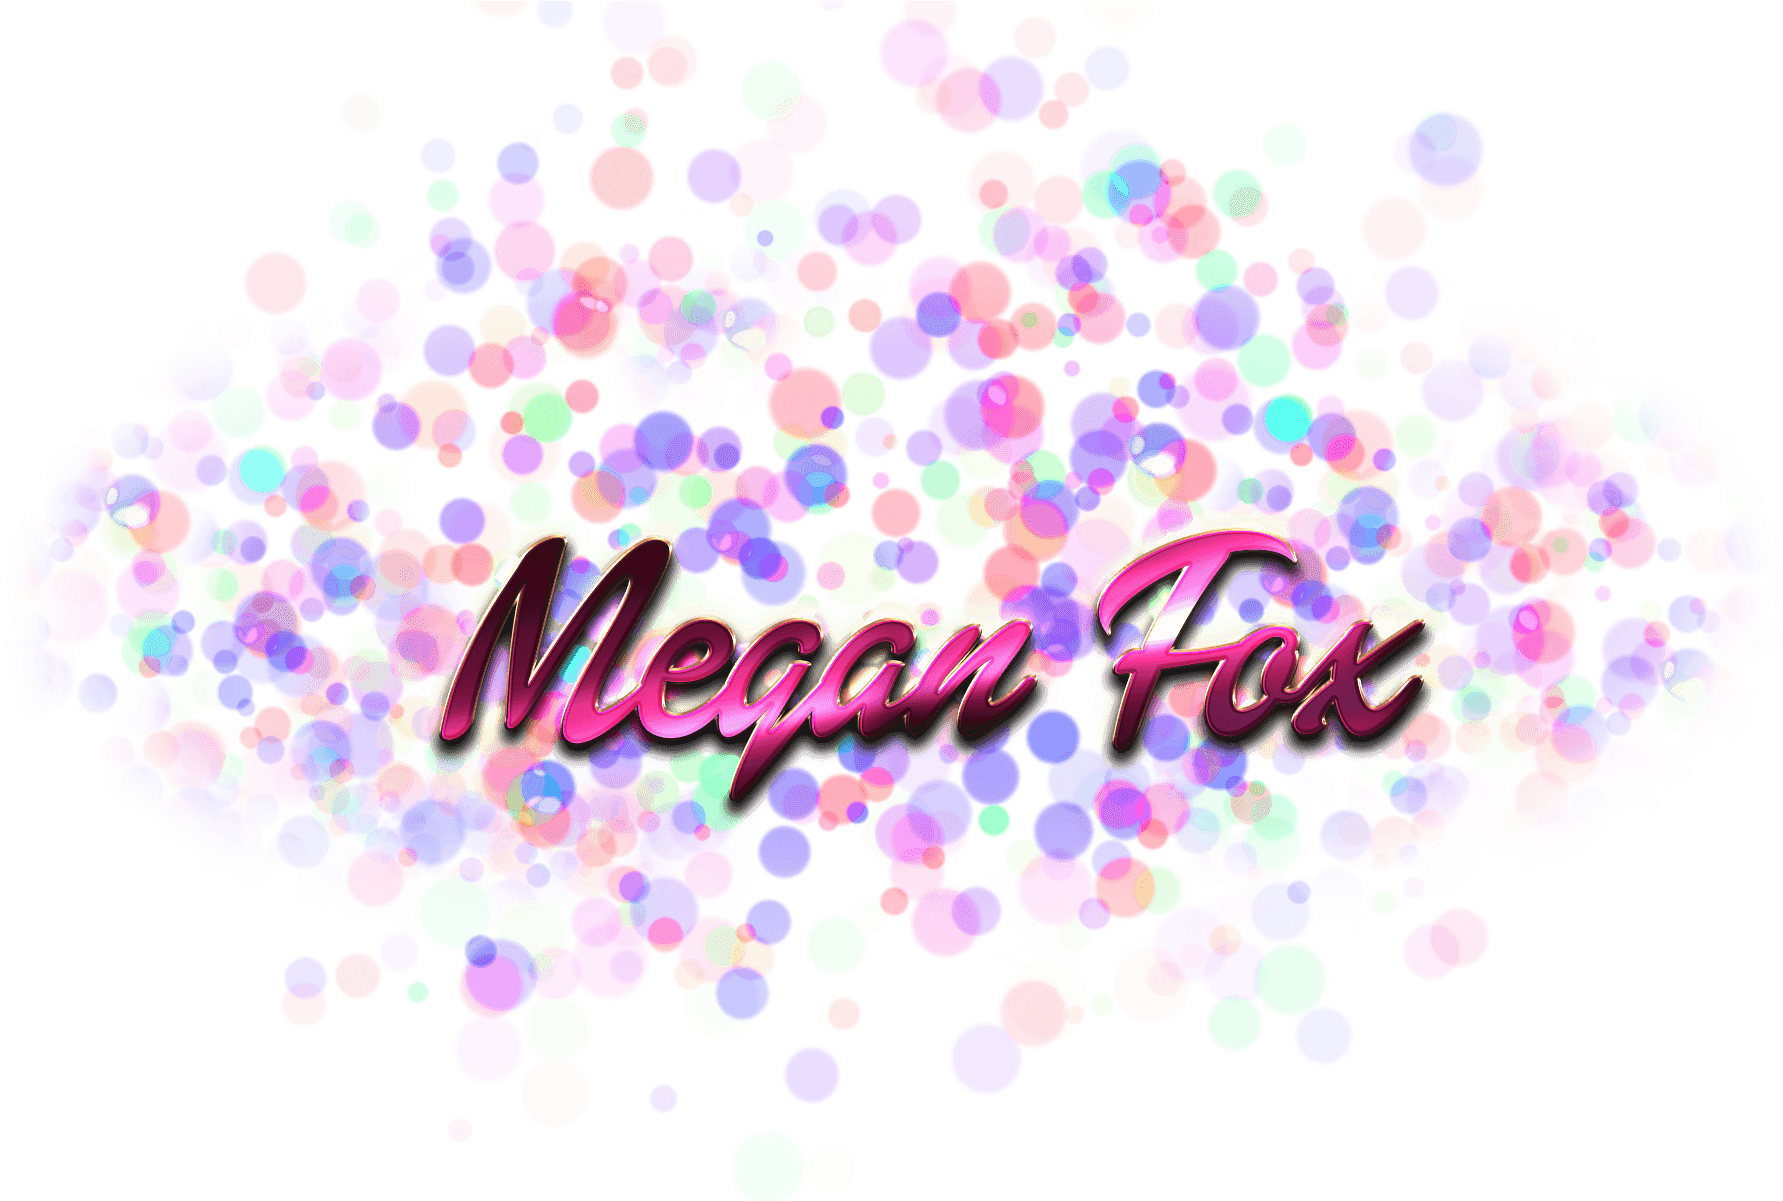 Grace Name Logo - Download Megan Fox Name Logo Bokeh Png - Grace Name PNG Image with ...